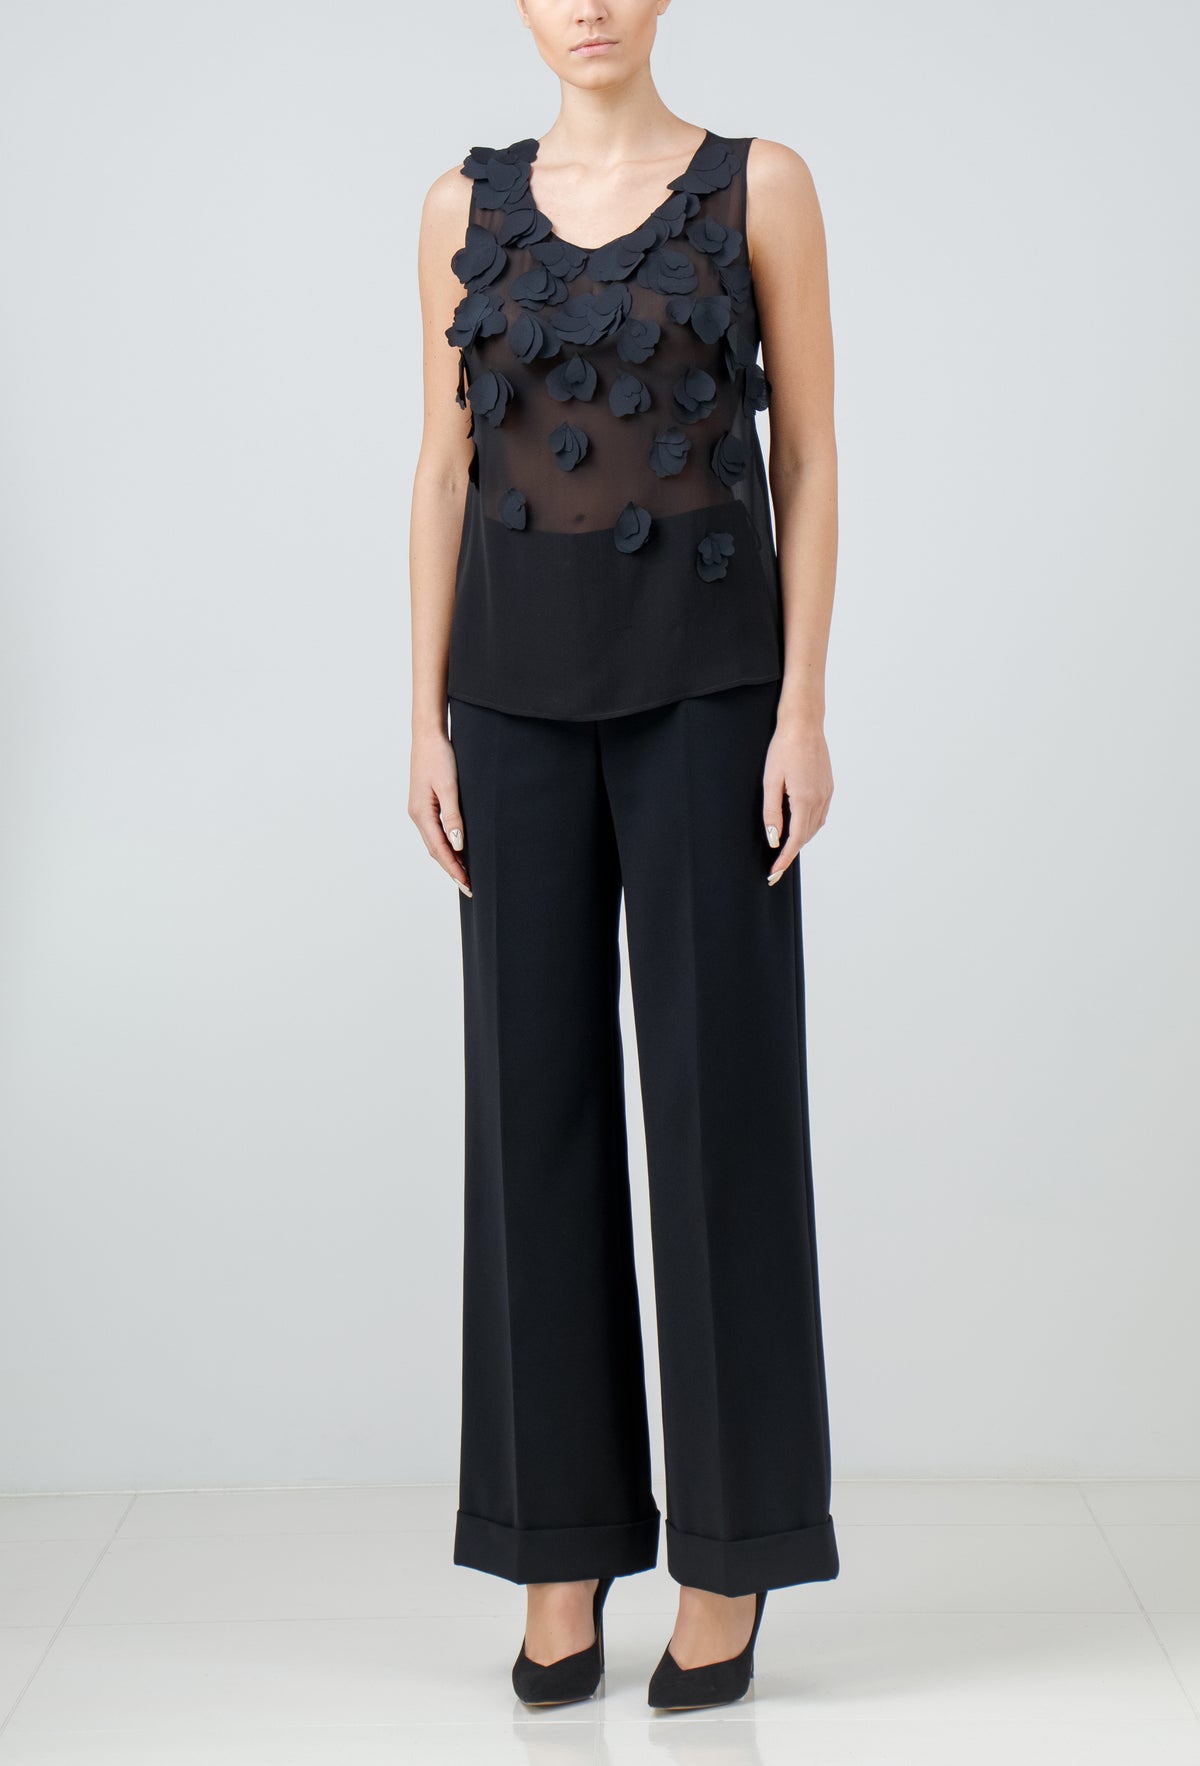 Black silk georgette sleeveless blouse with hand-cut organza petals